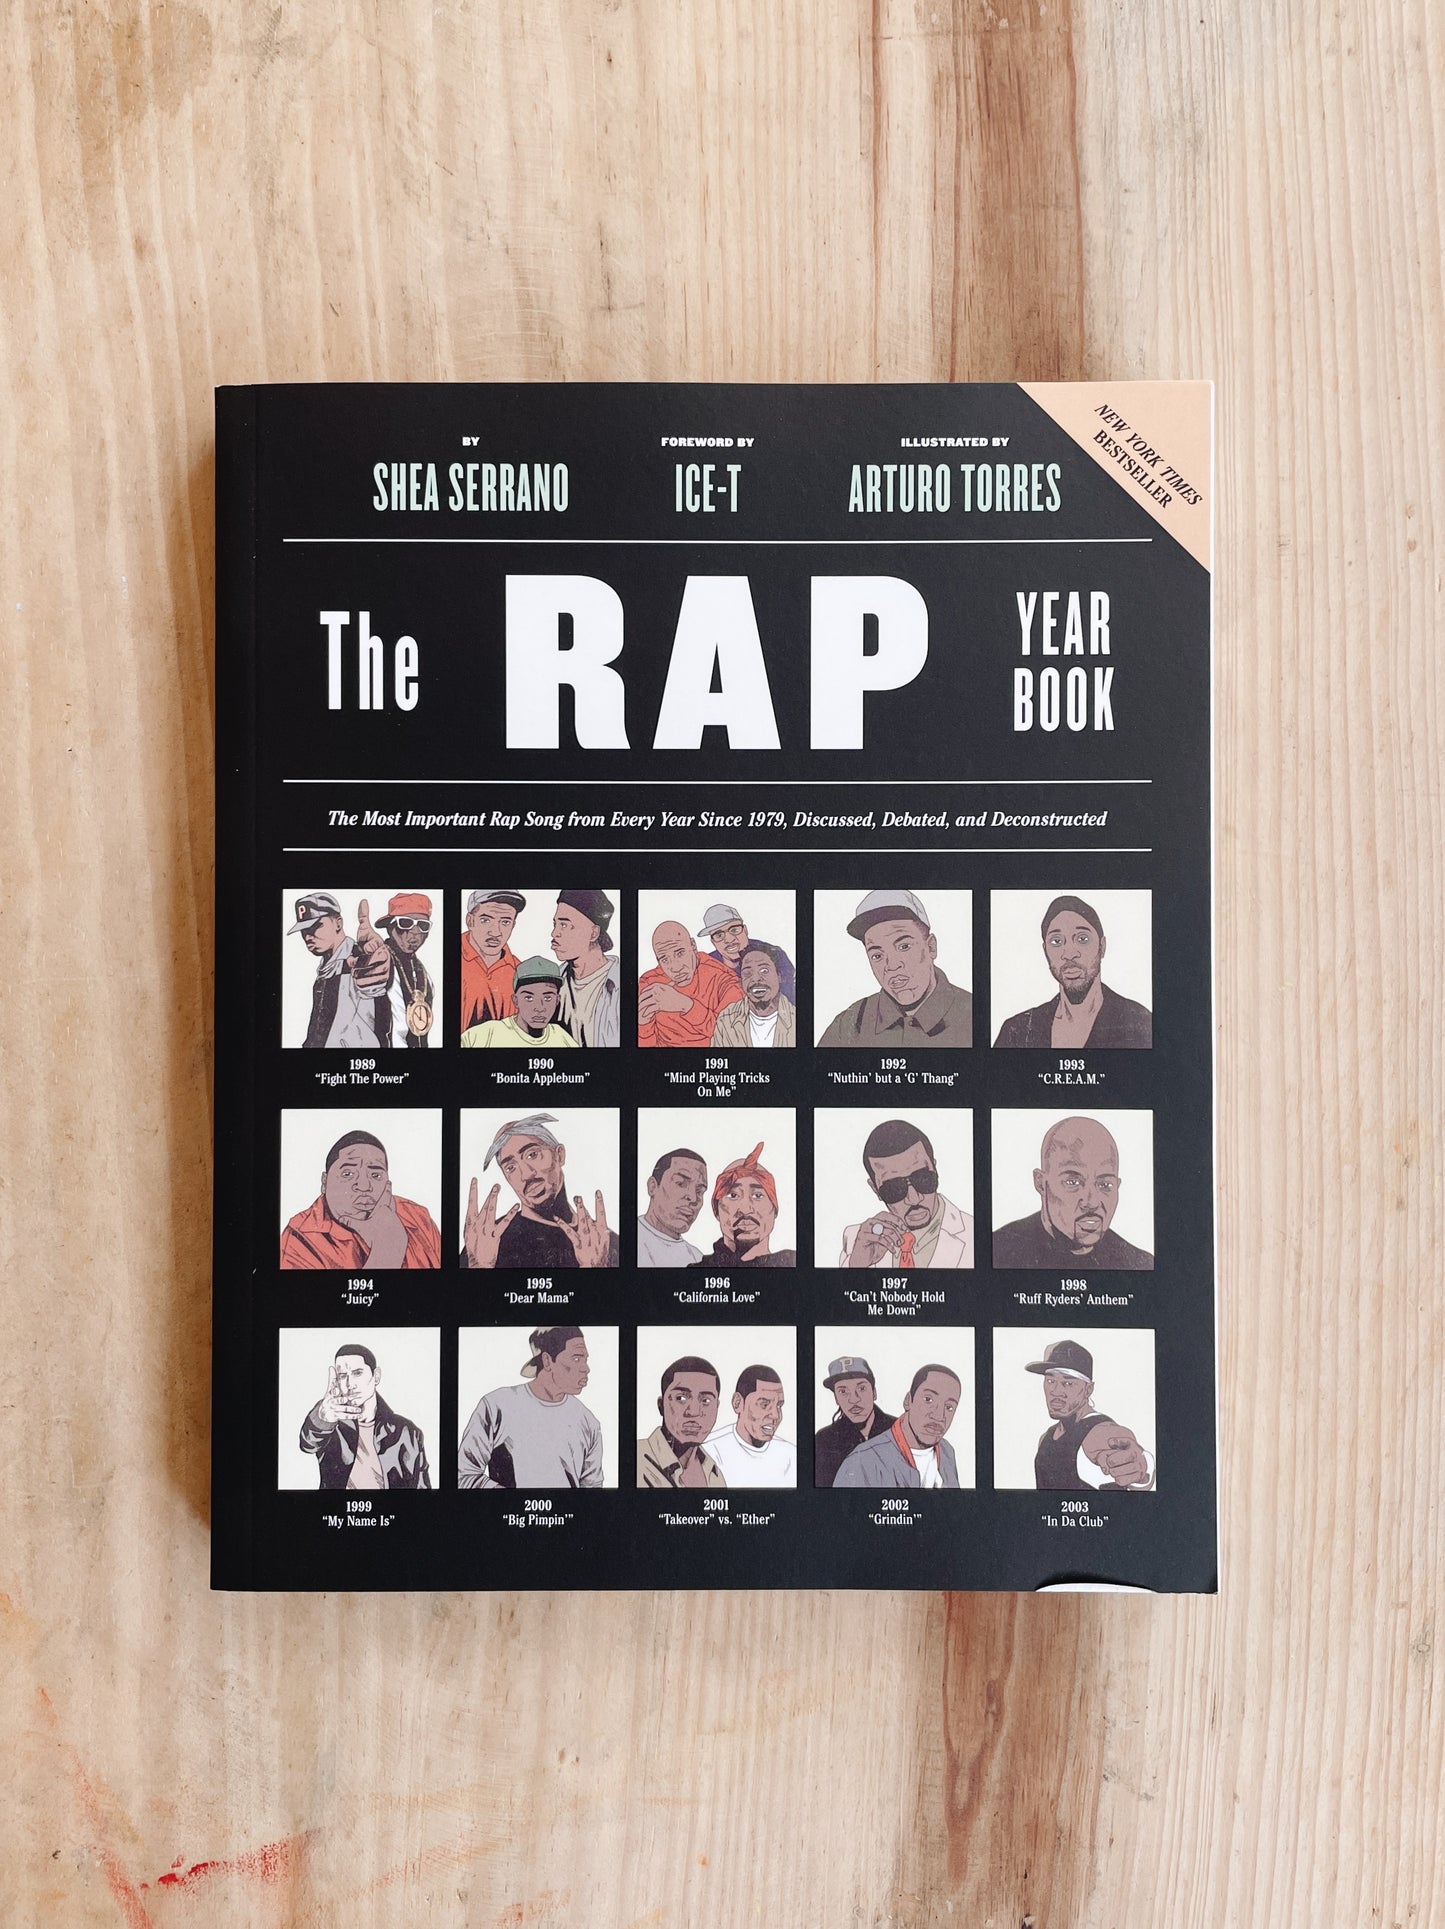 Serano - The Rap Year Book